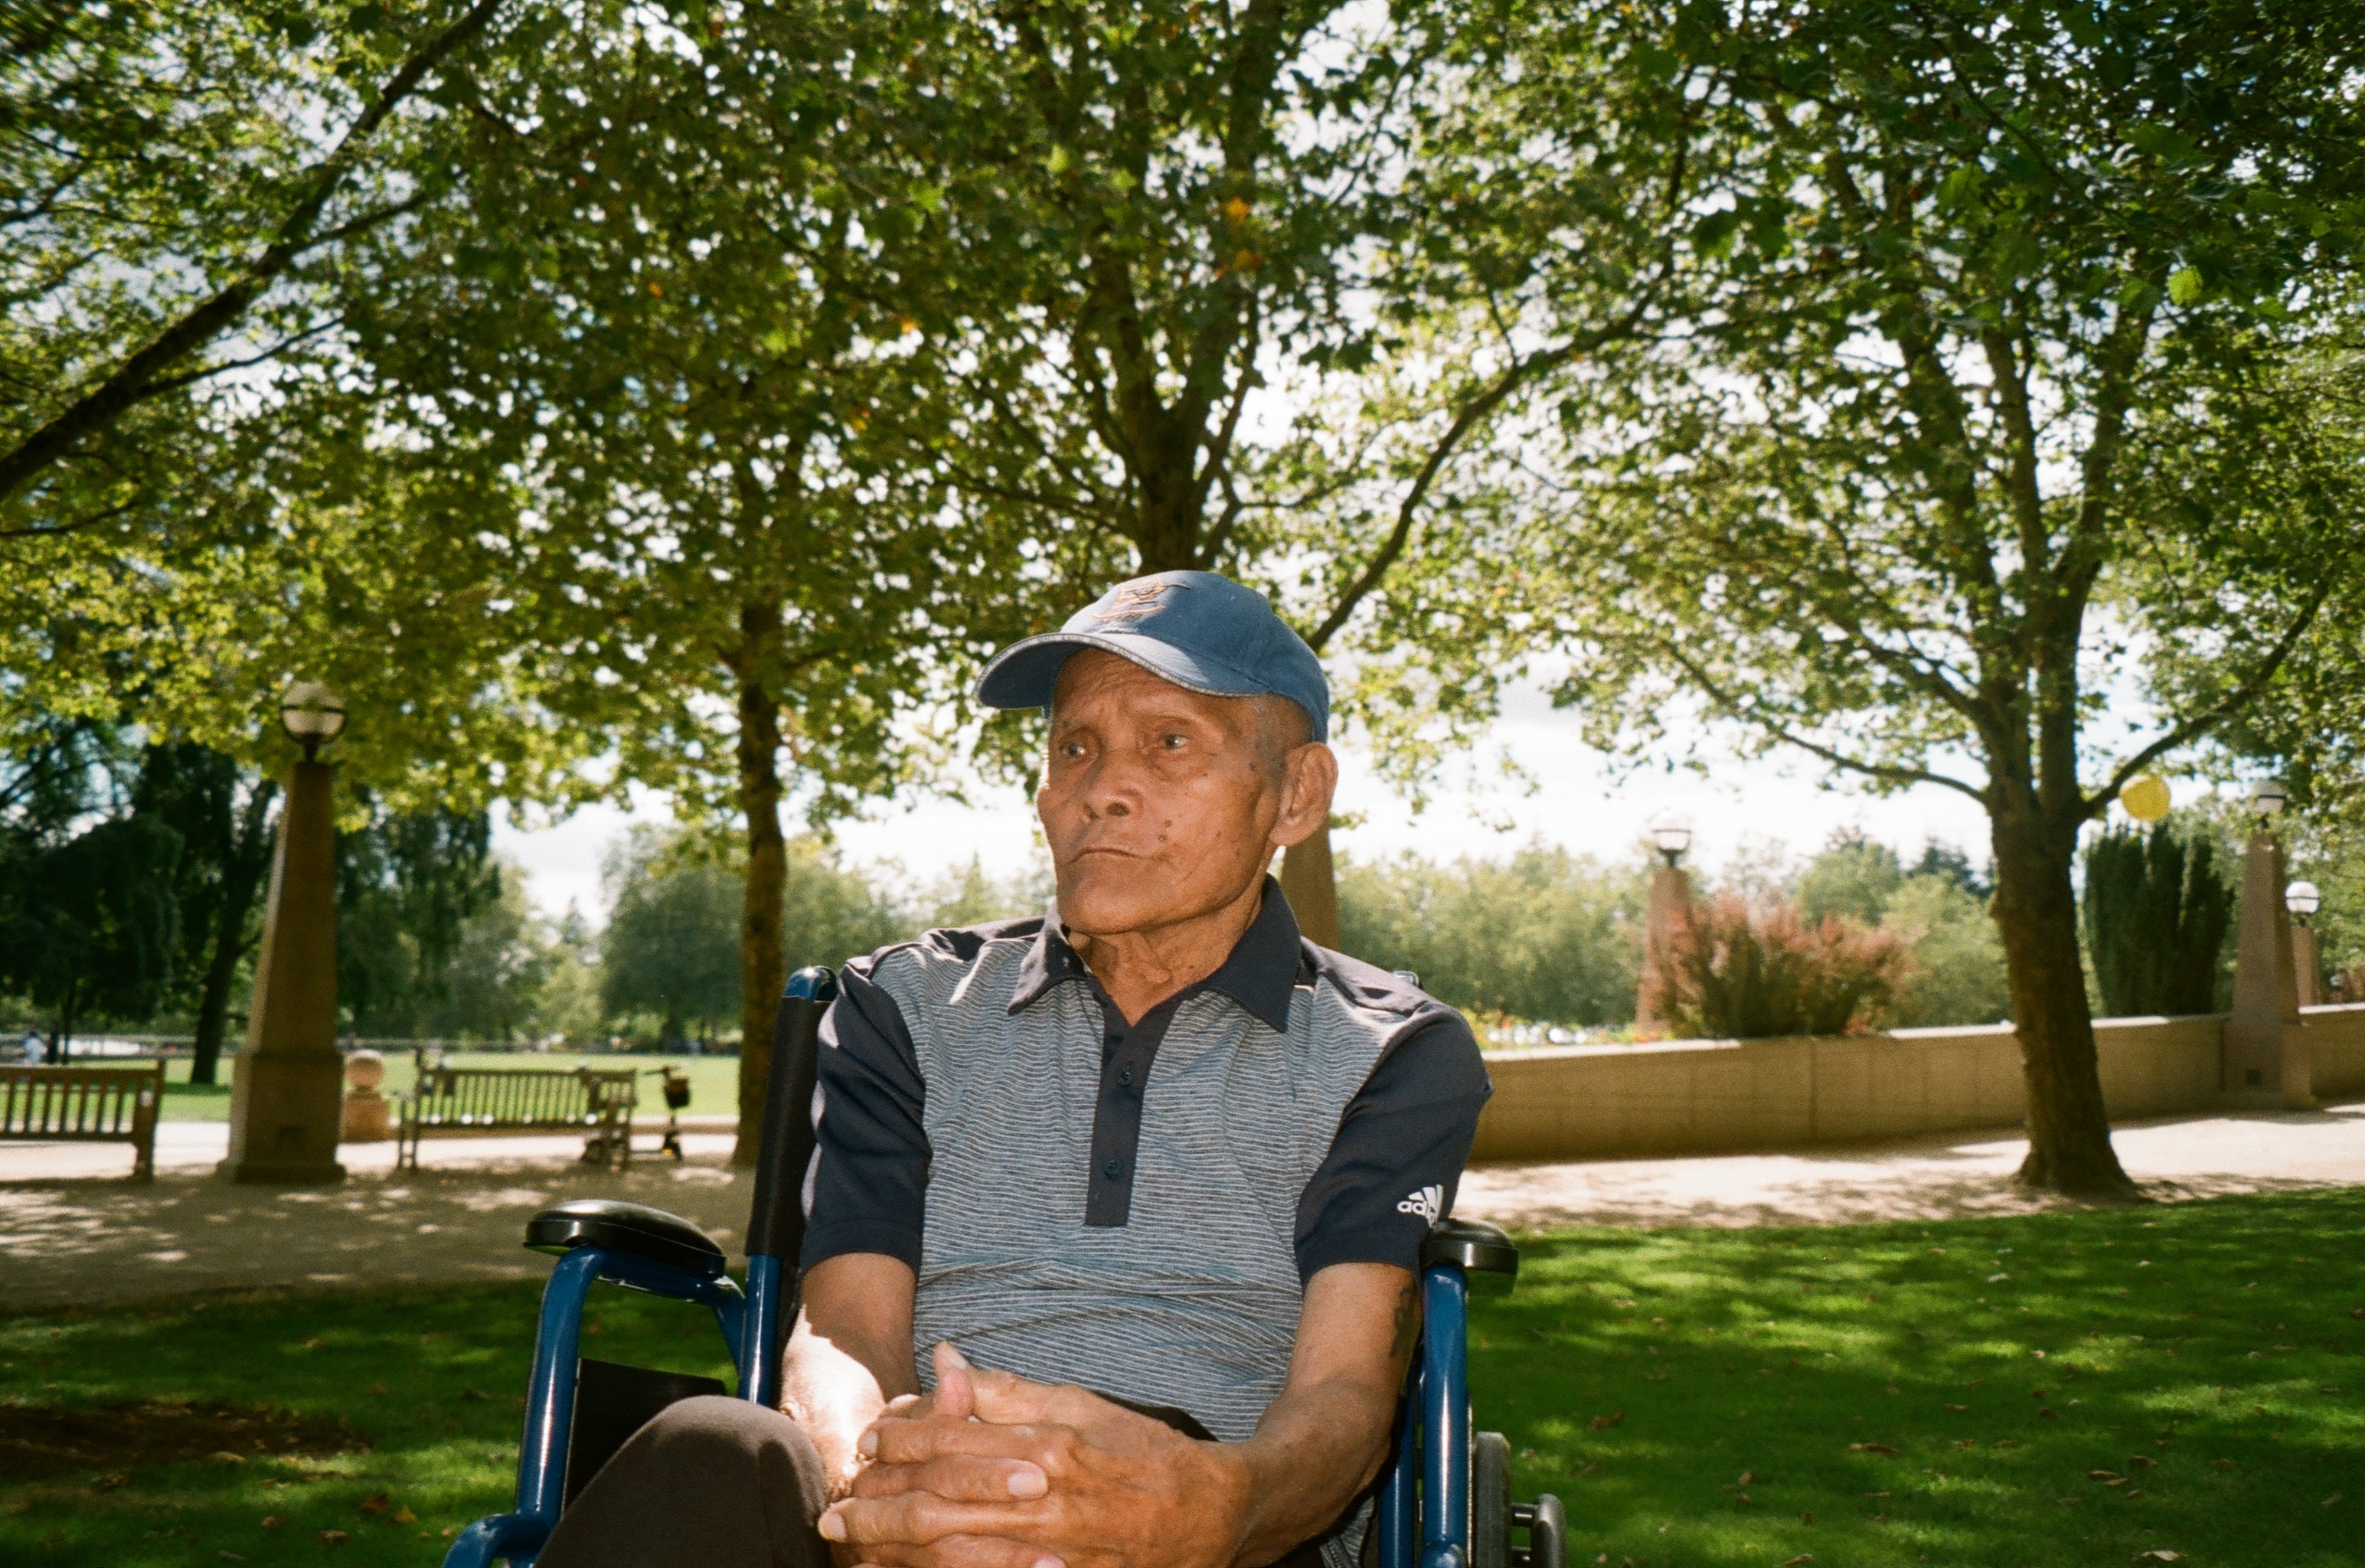 Elderly man sitting in United States park.